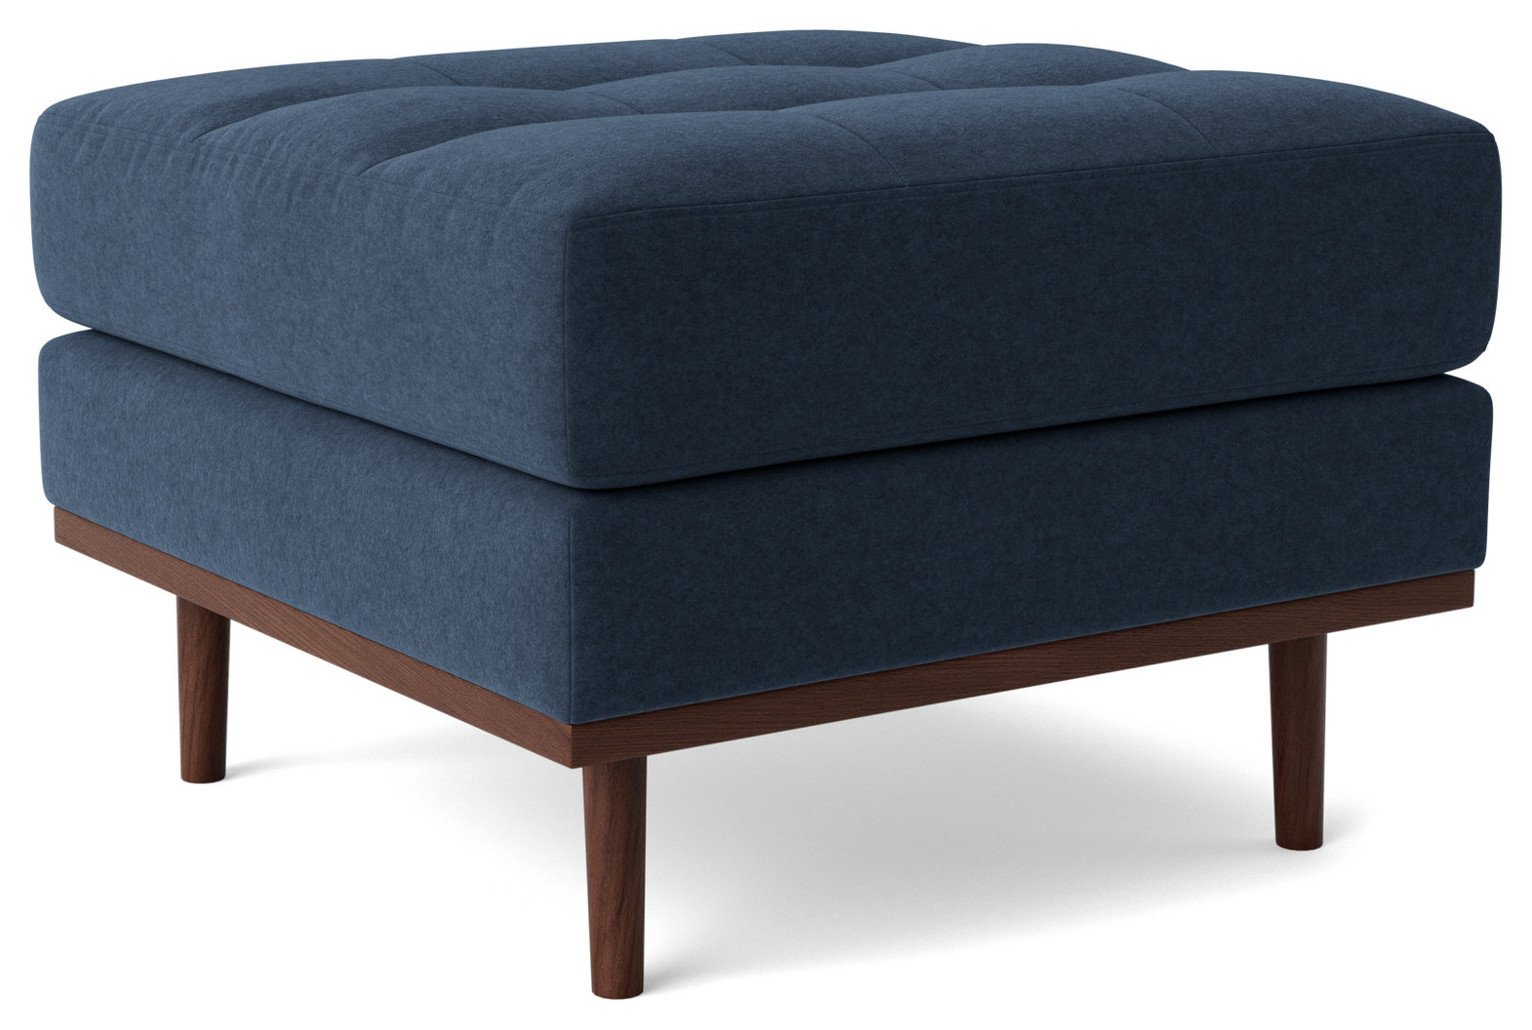 Swoon Berlin Fabric Ottoman Footstool - Indigo Blue